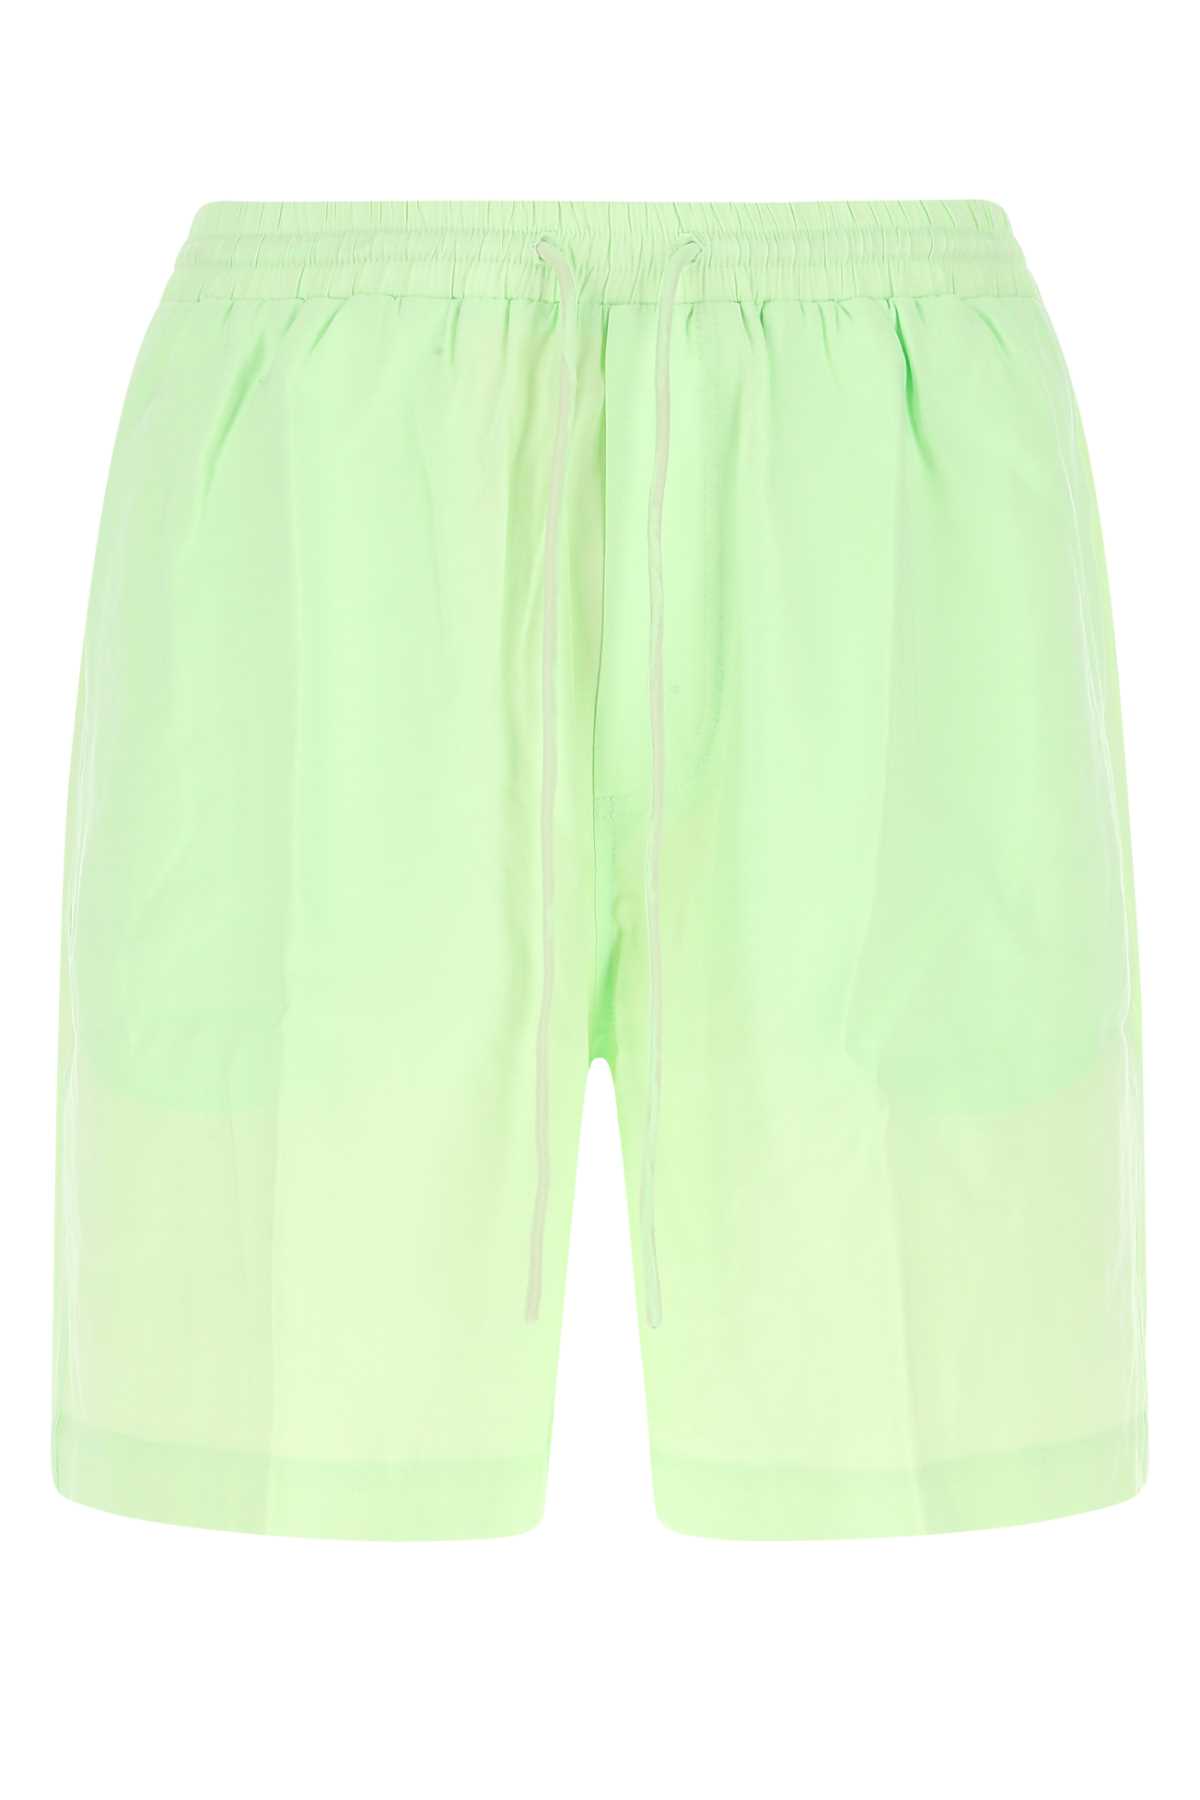 Pastel Green Modal Blend Bermuda Shorts